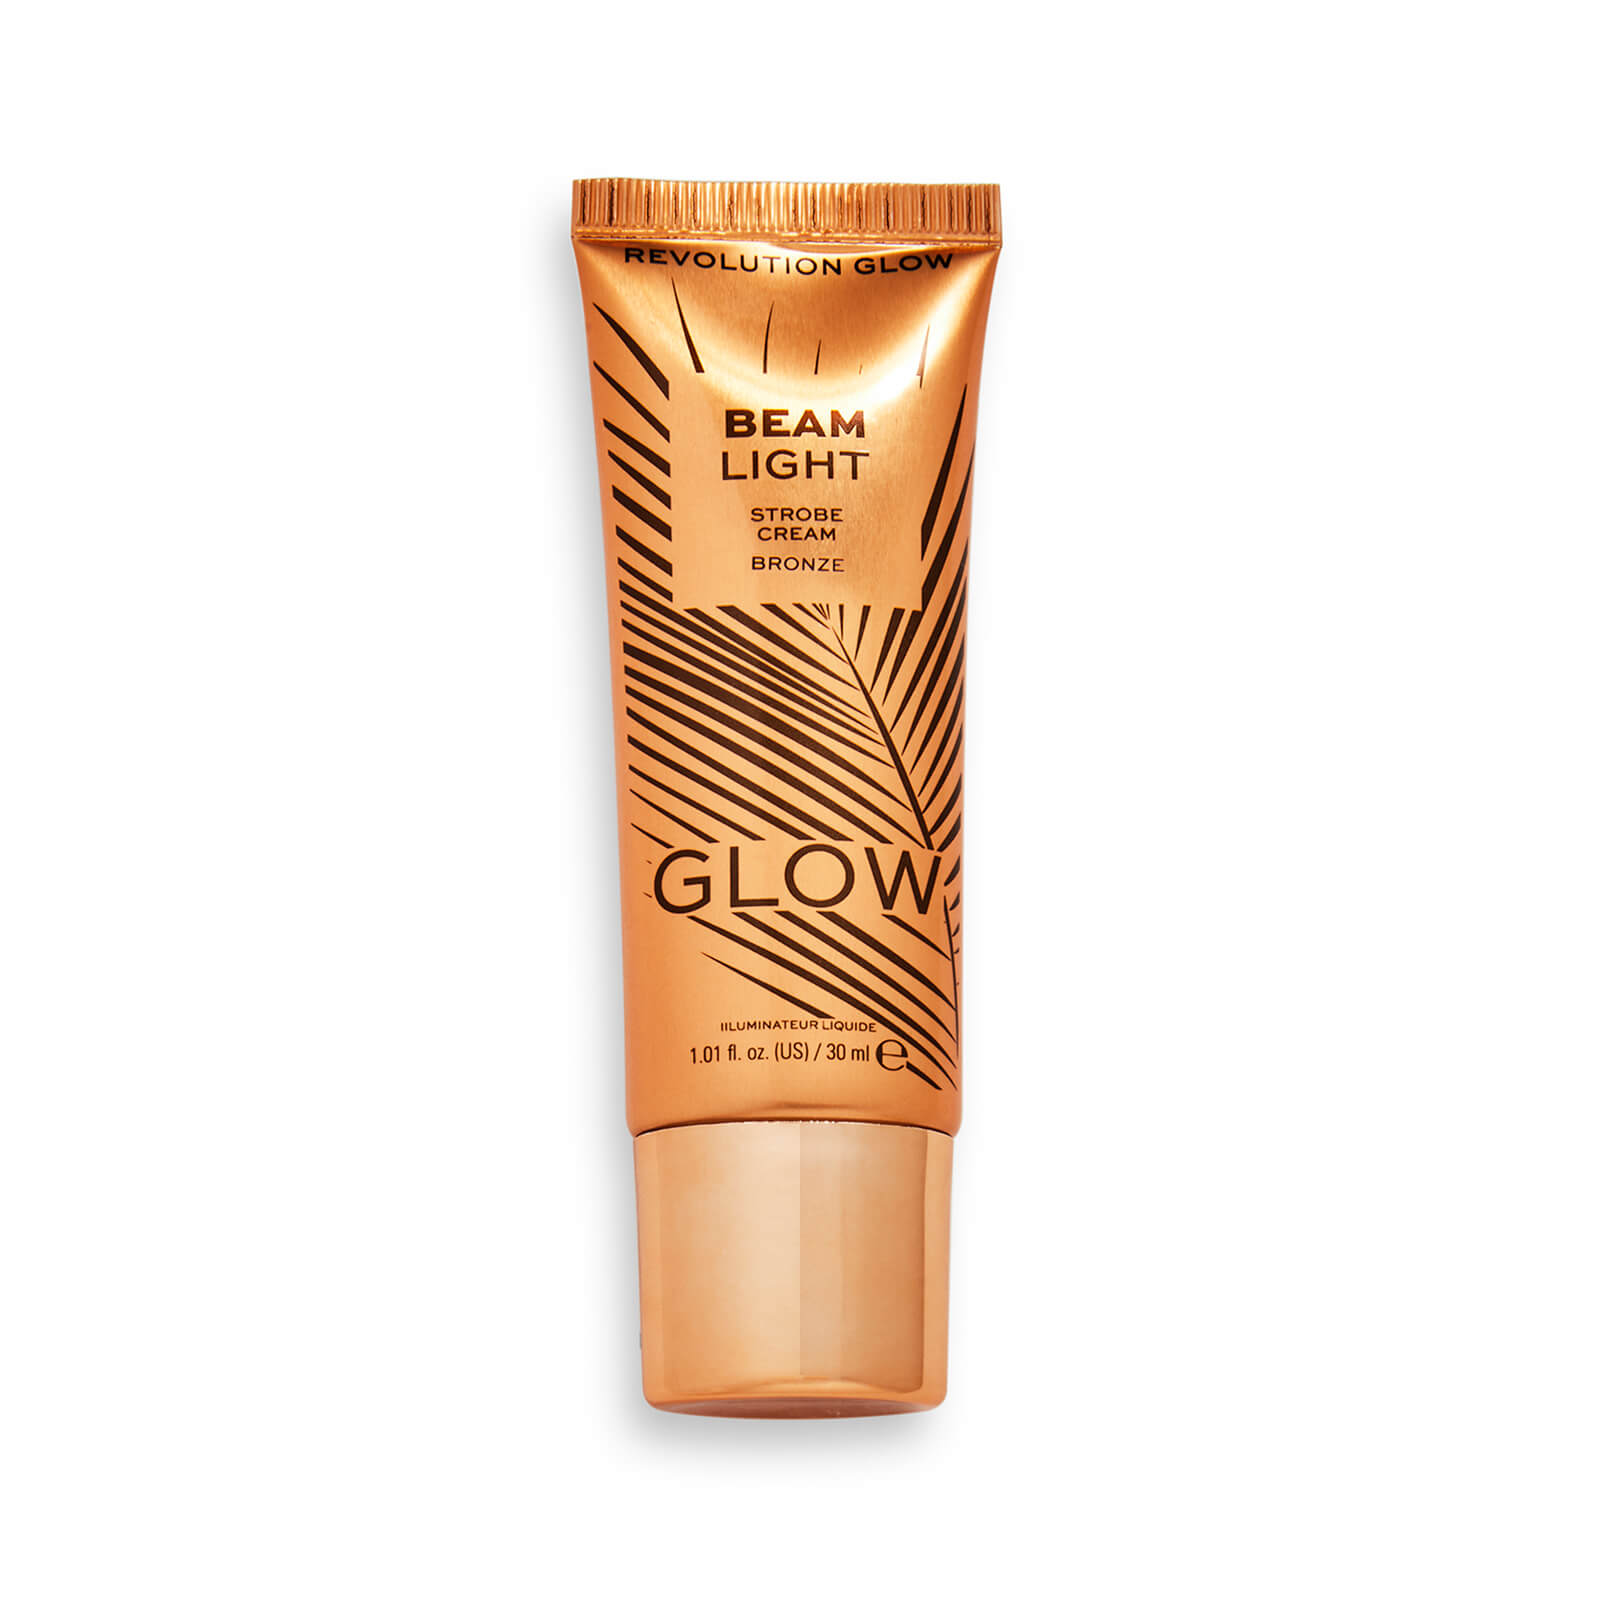 Makeup Revolution Glow Beam Light Strobe Cream 30ml (Various Shades) - Bronze